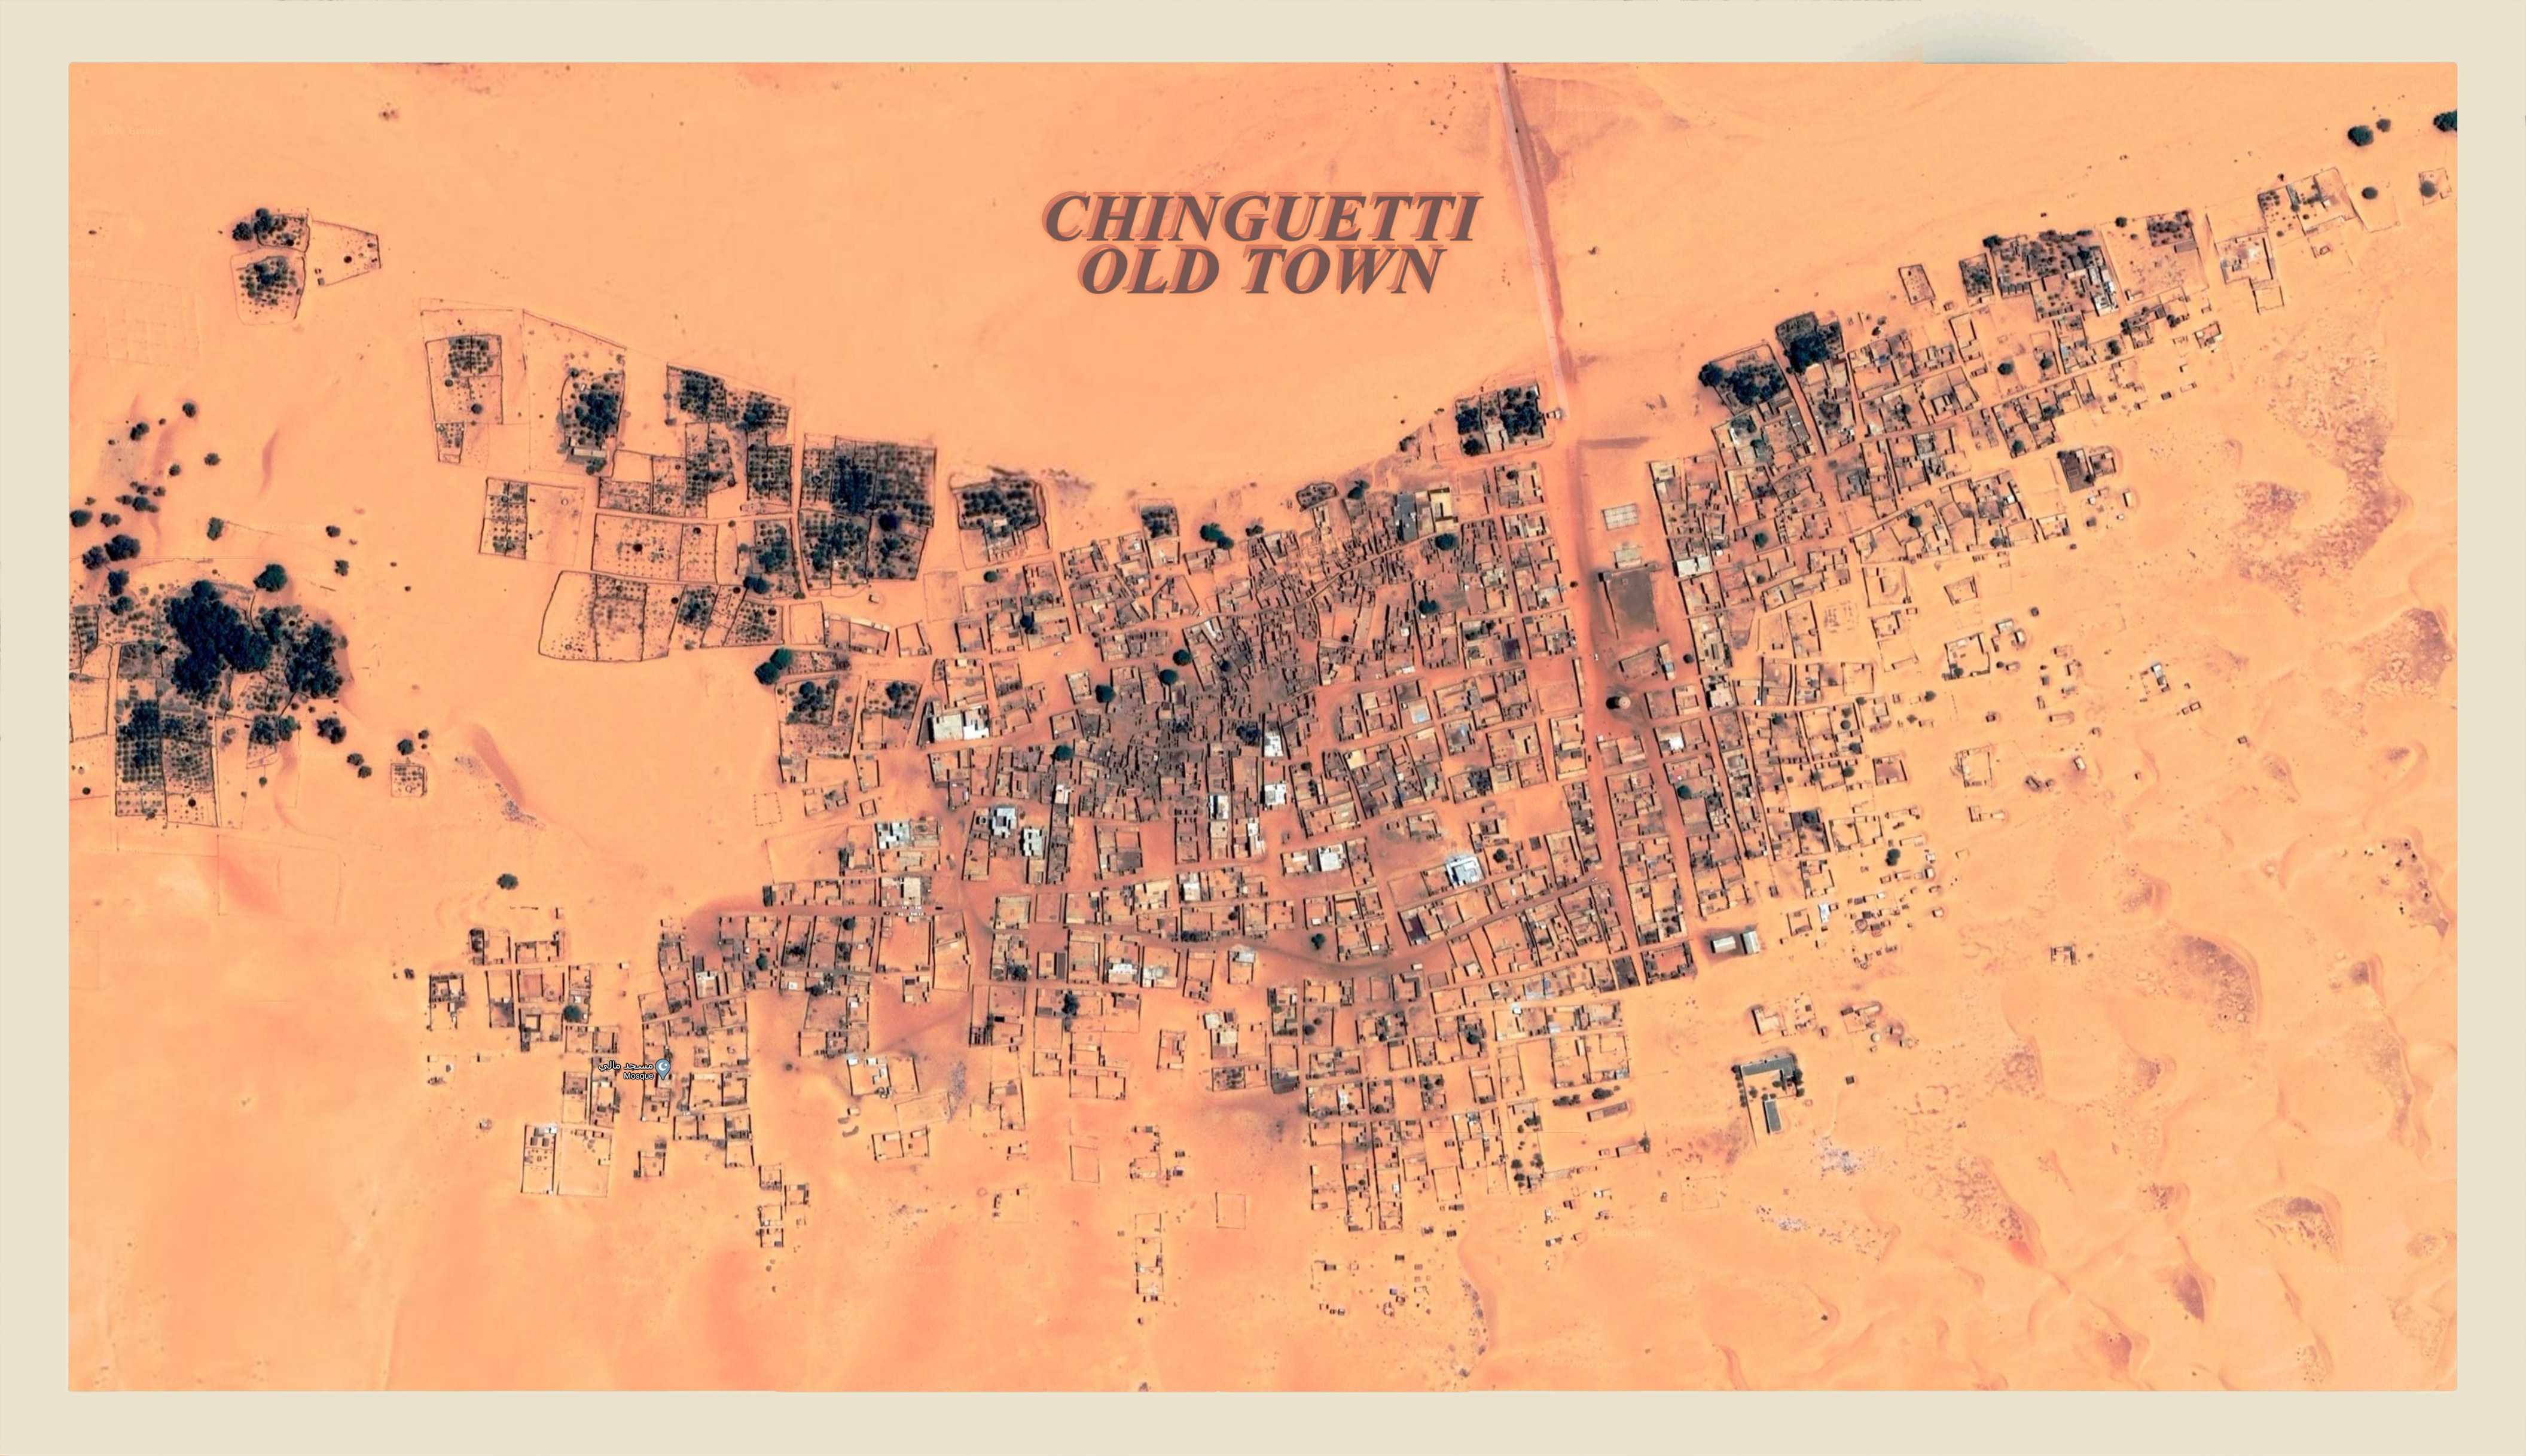 chinguetti-old-town-map-planimetric